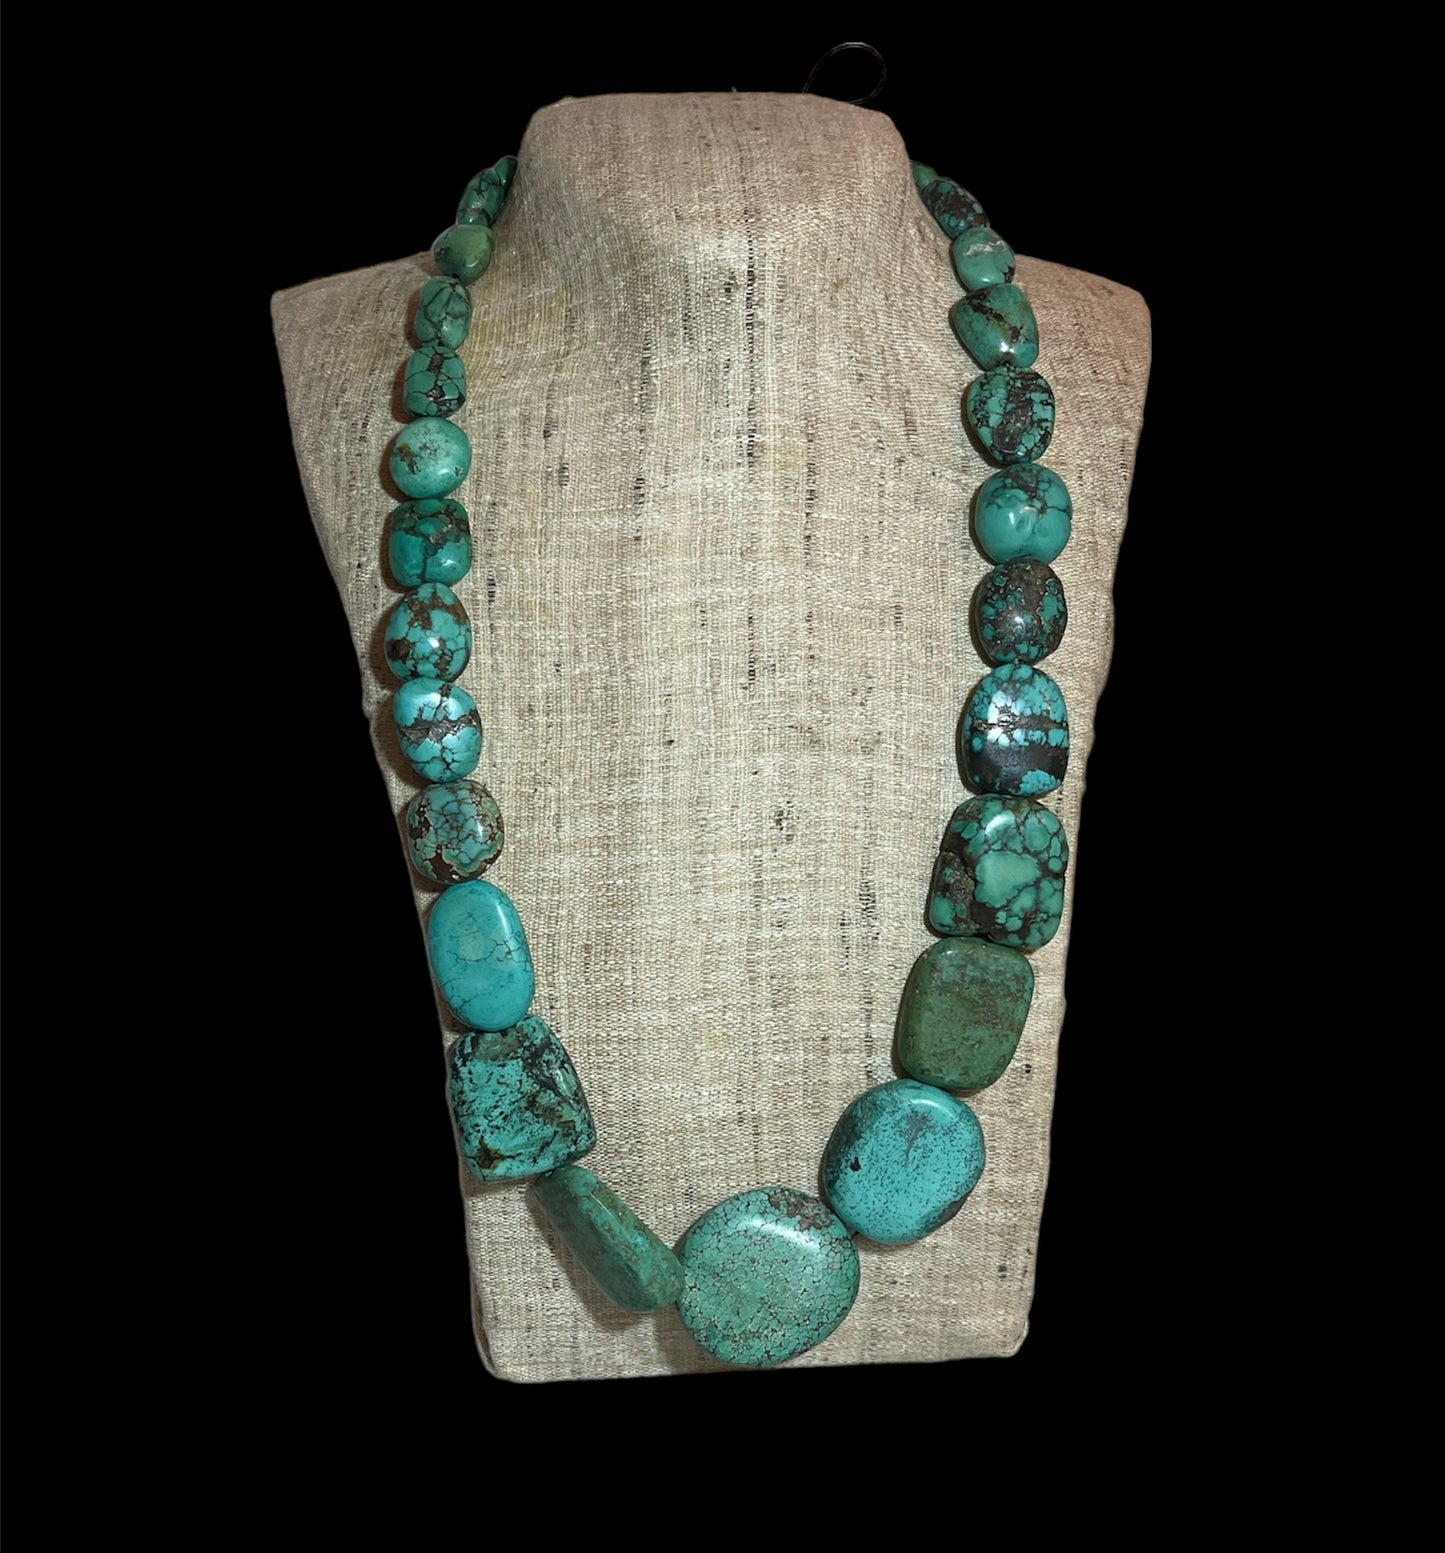 Necklaces with antique Tibetan / Ladakhi turquoise beads